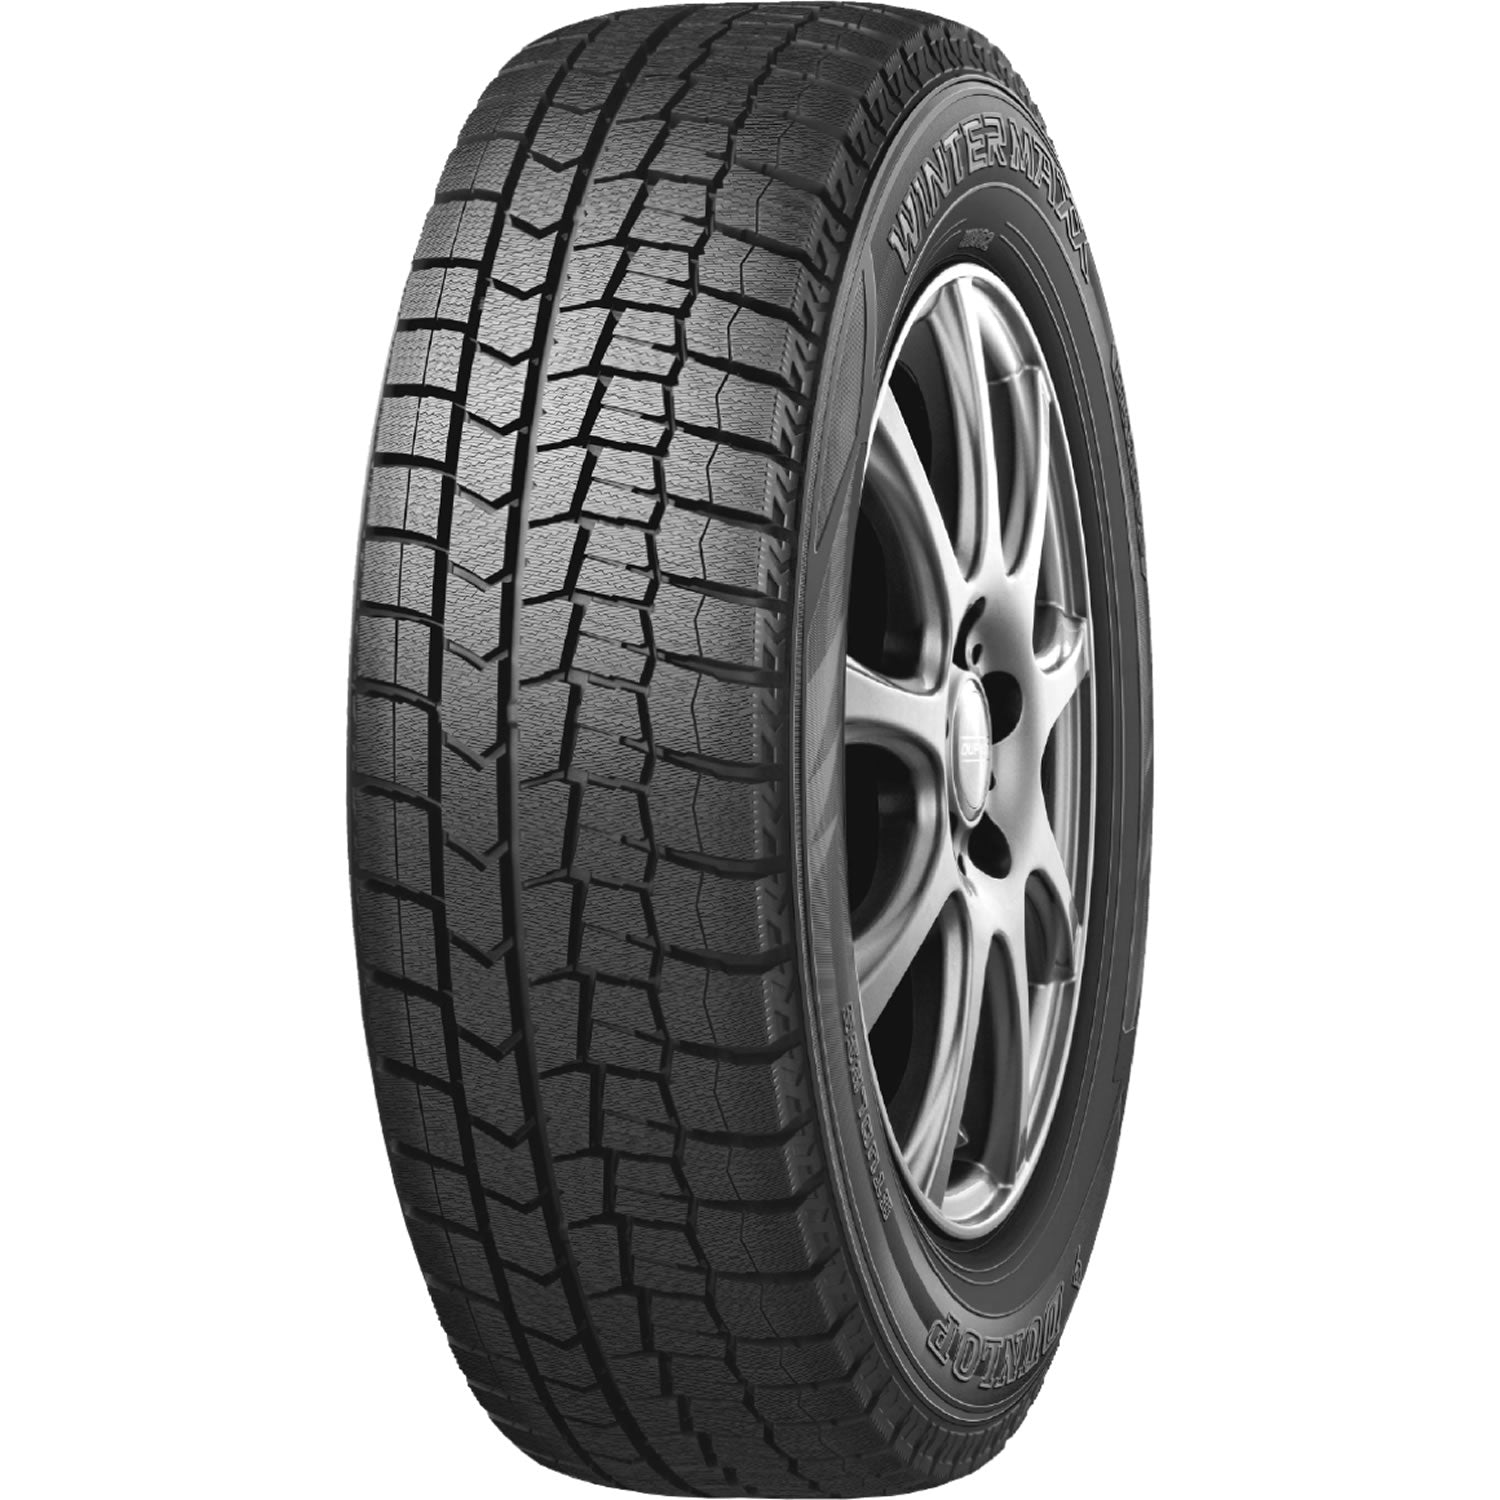 DUNLOP WINTER MAXX 2 225/45R17 (25X8.9R 17) Tires